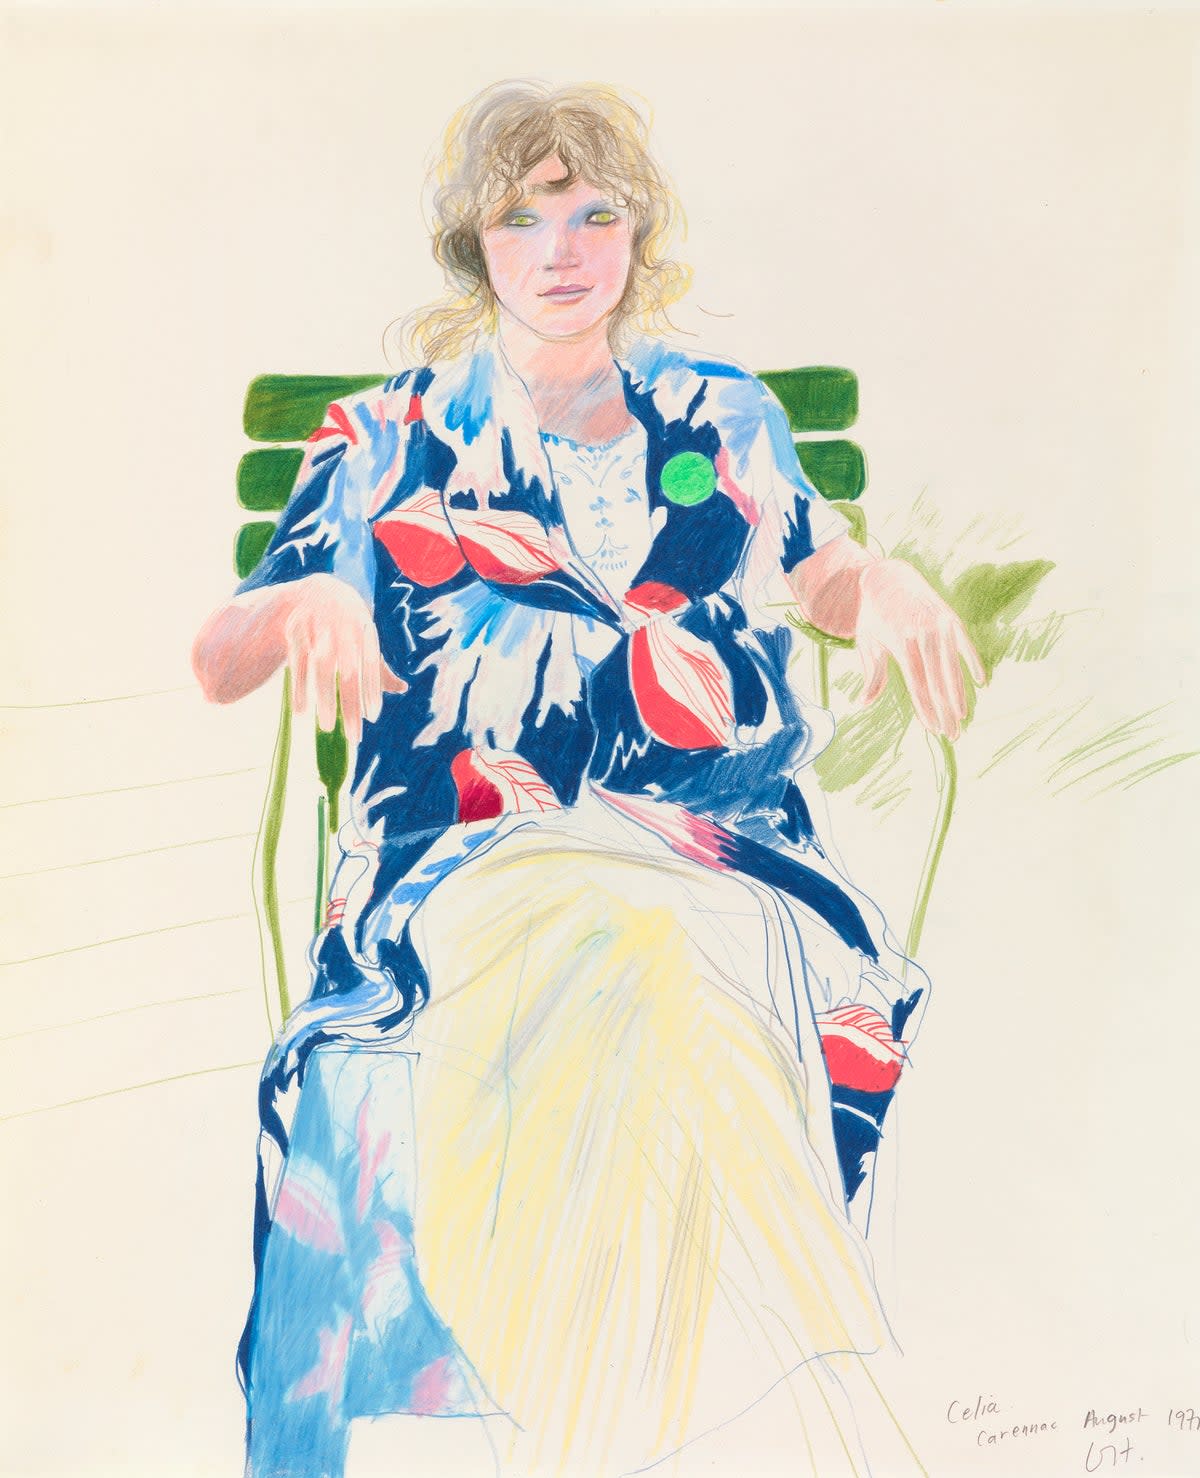 Celia, Carennac, August 1971 by David Hockney (Richard Schmidt)